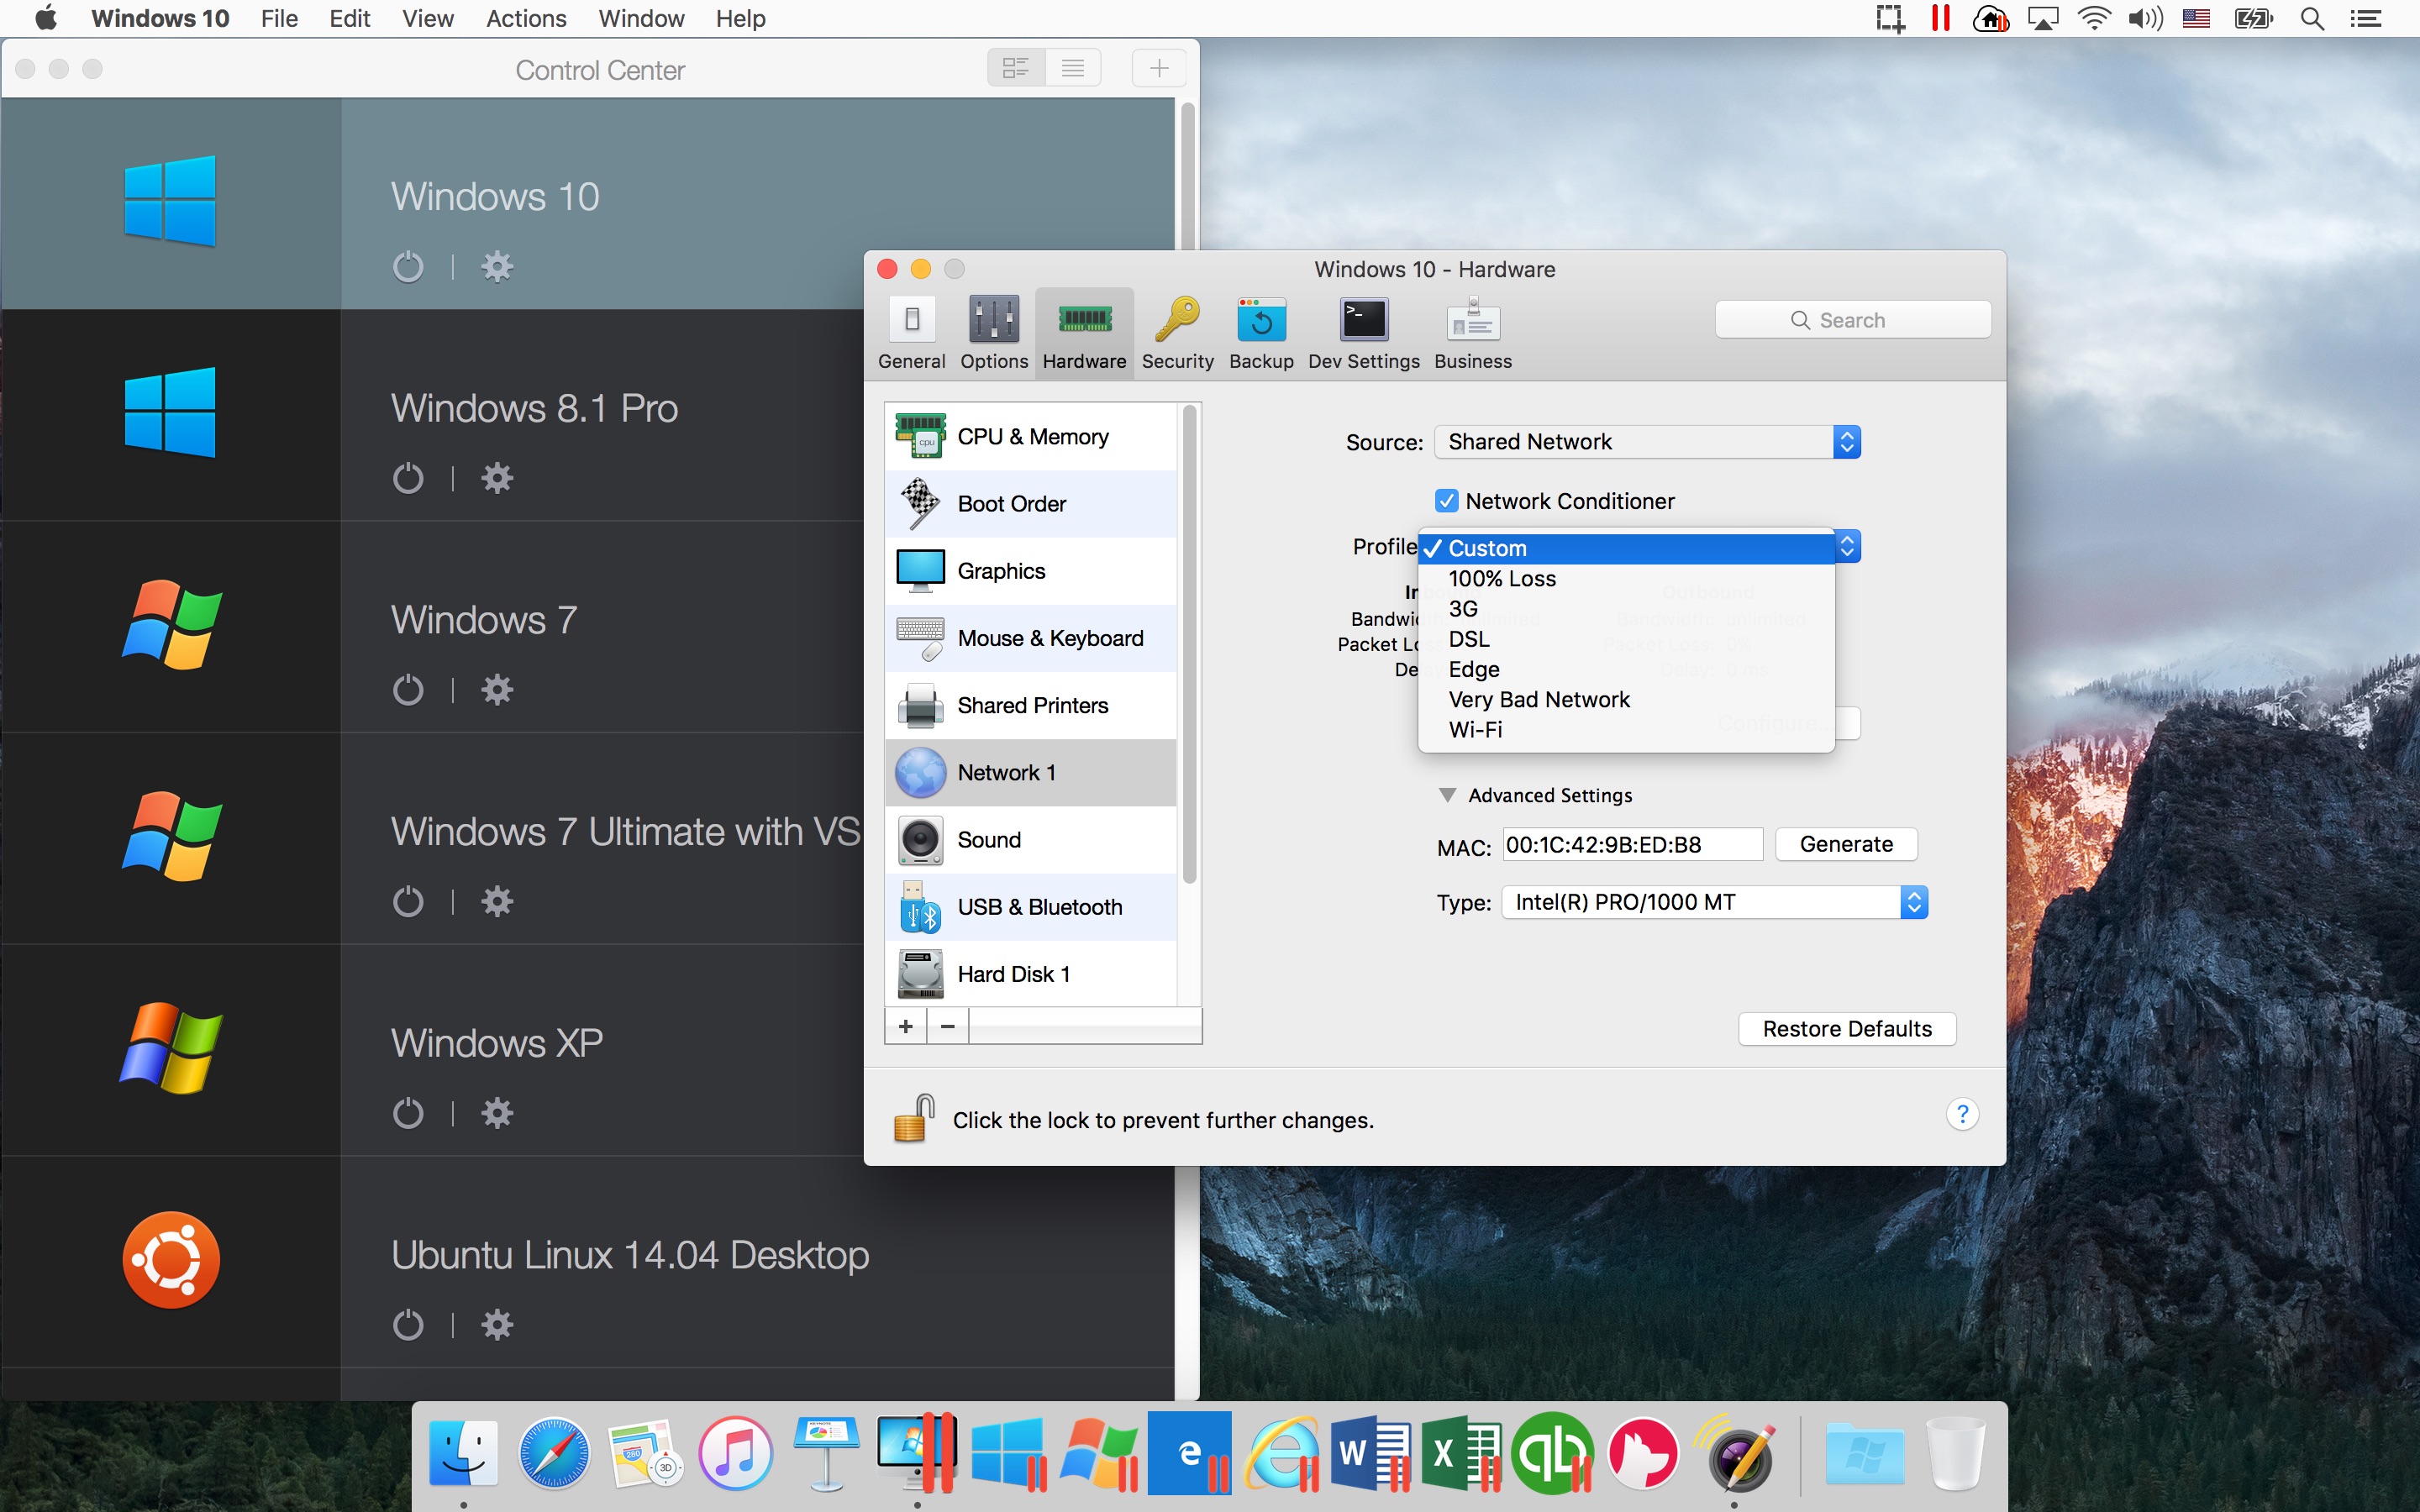 Parallels Desktop 12 Download For Mac